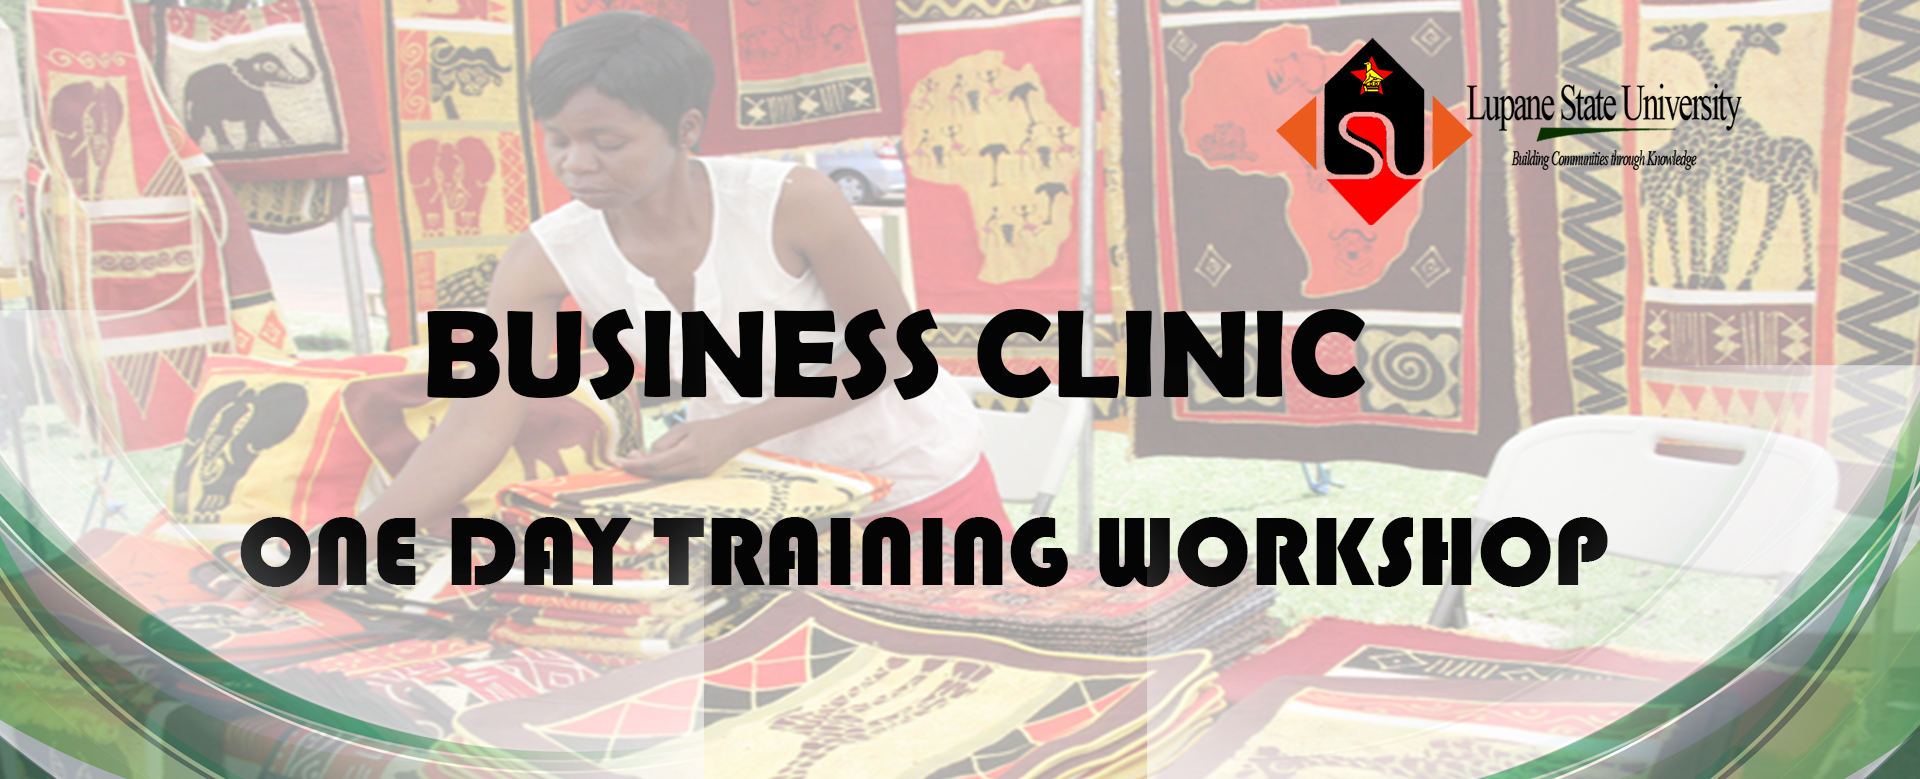 Business Clinic Workshop